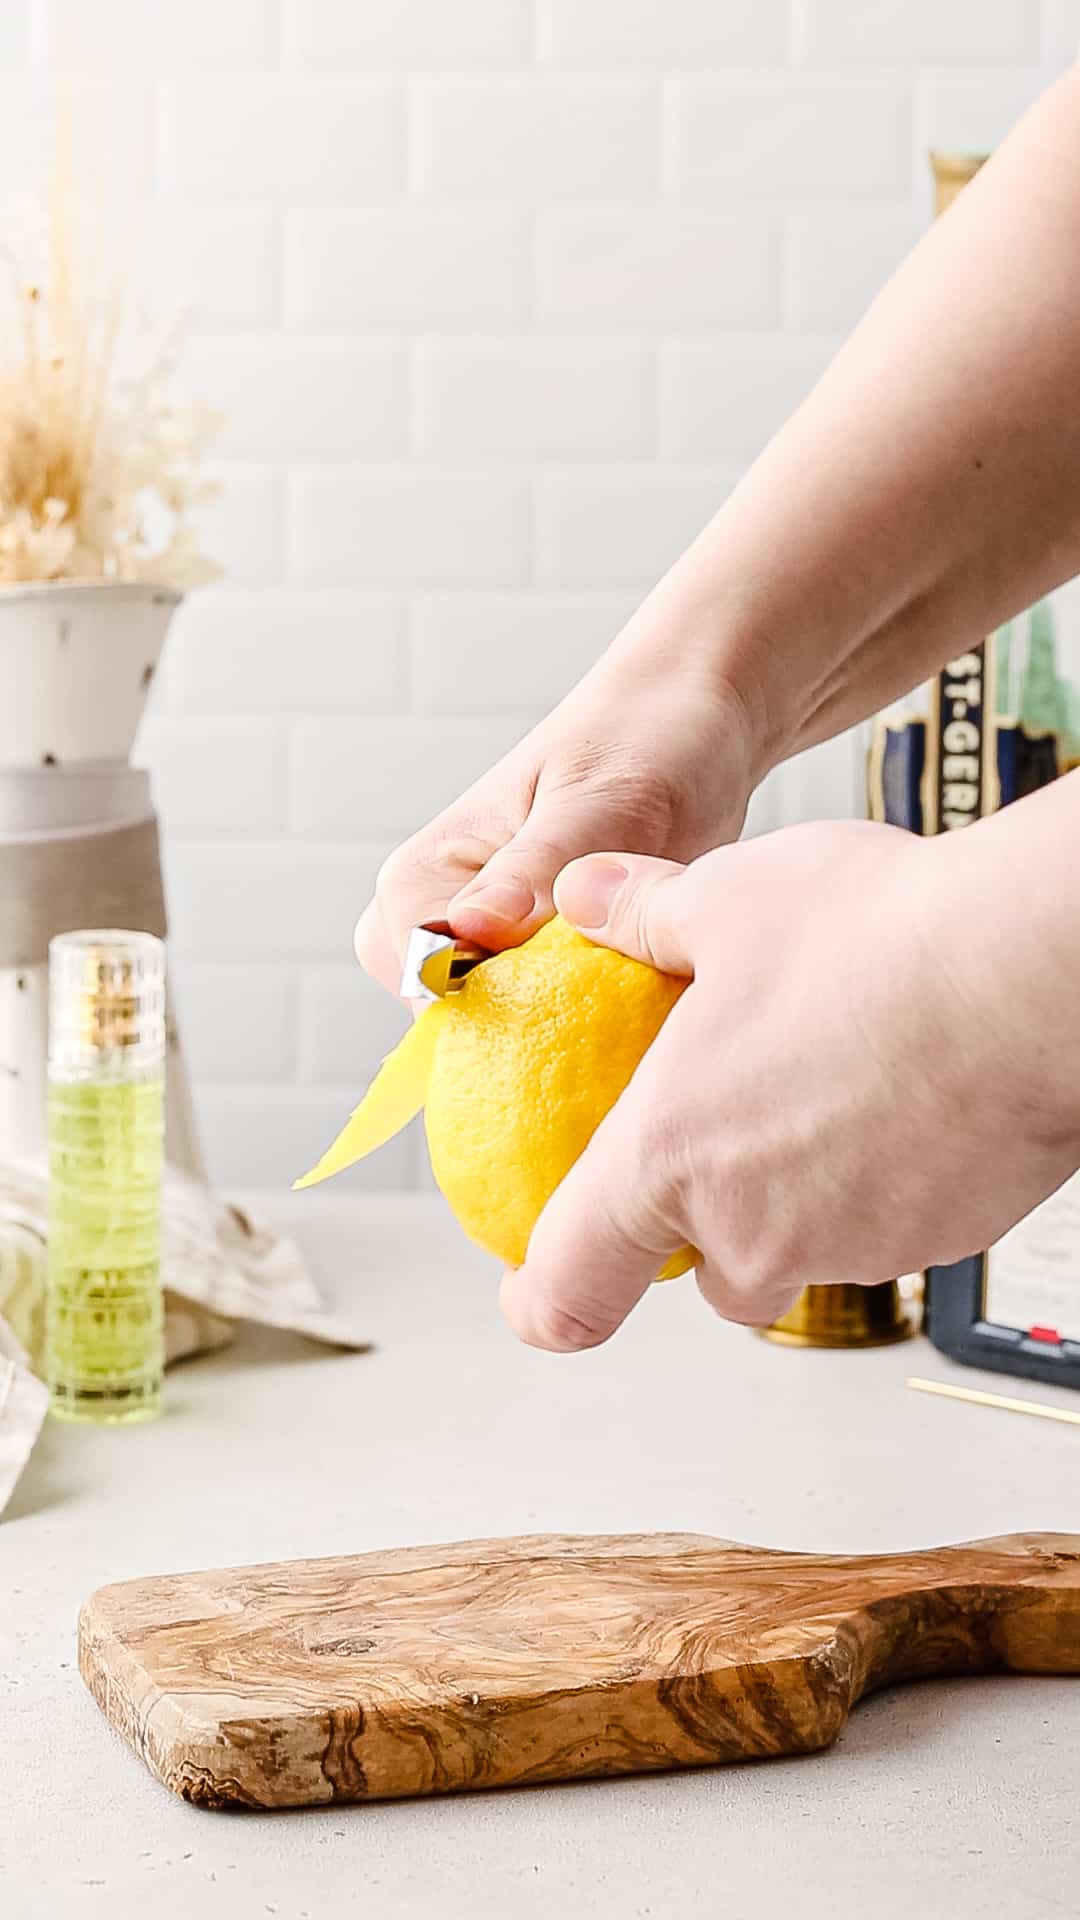 Hands using a vegetable peeler to peel a lemon.